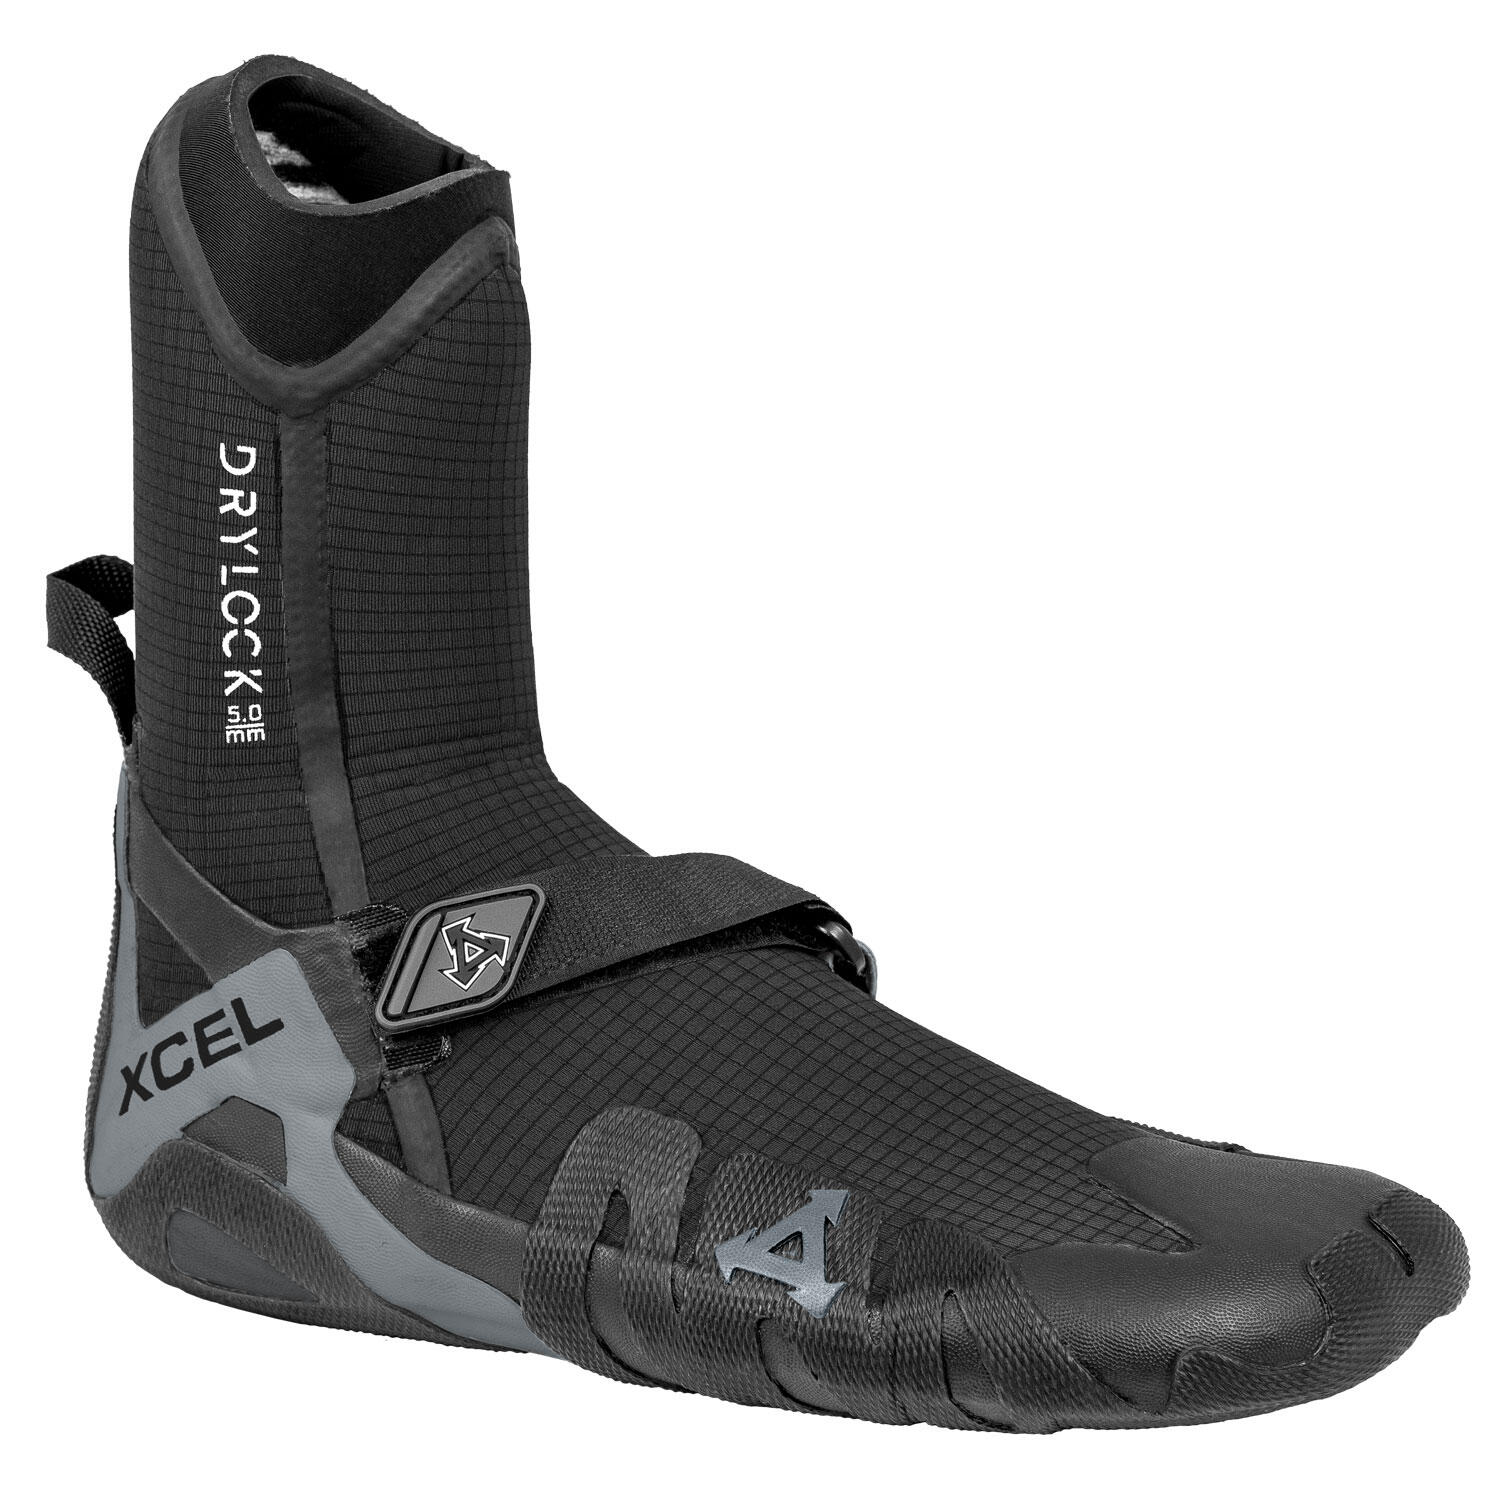 XCEL Xcel 5mm Drylock Round Toe Wetsuit Boots